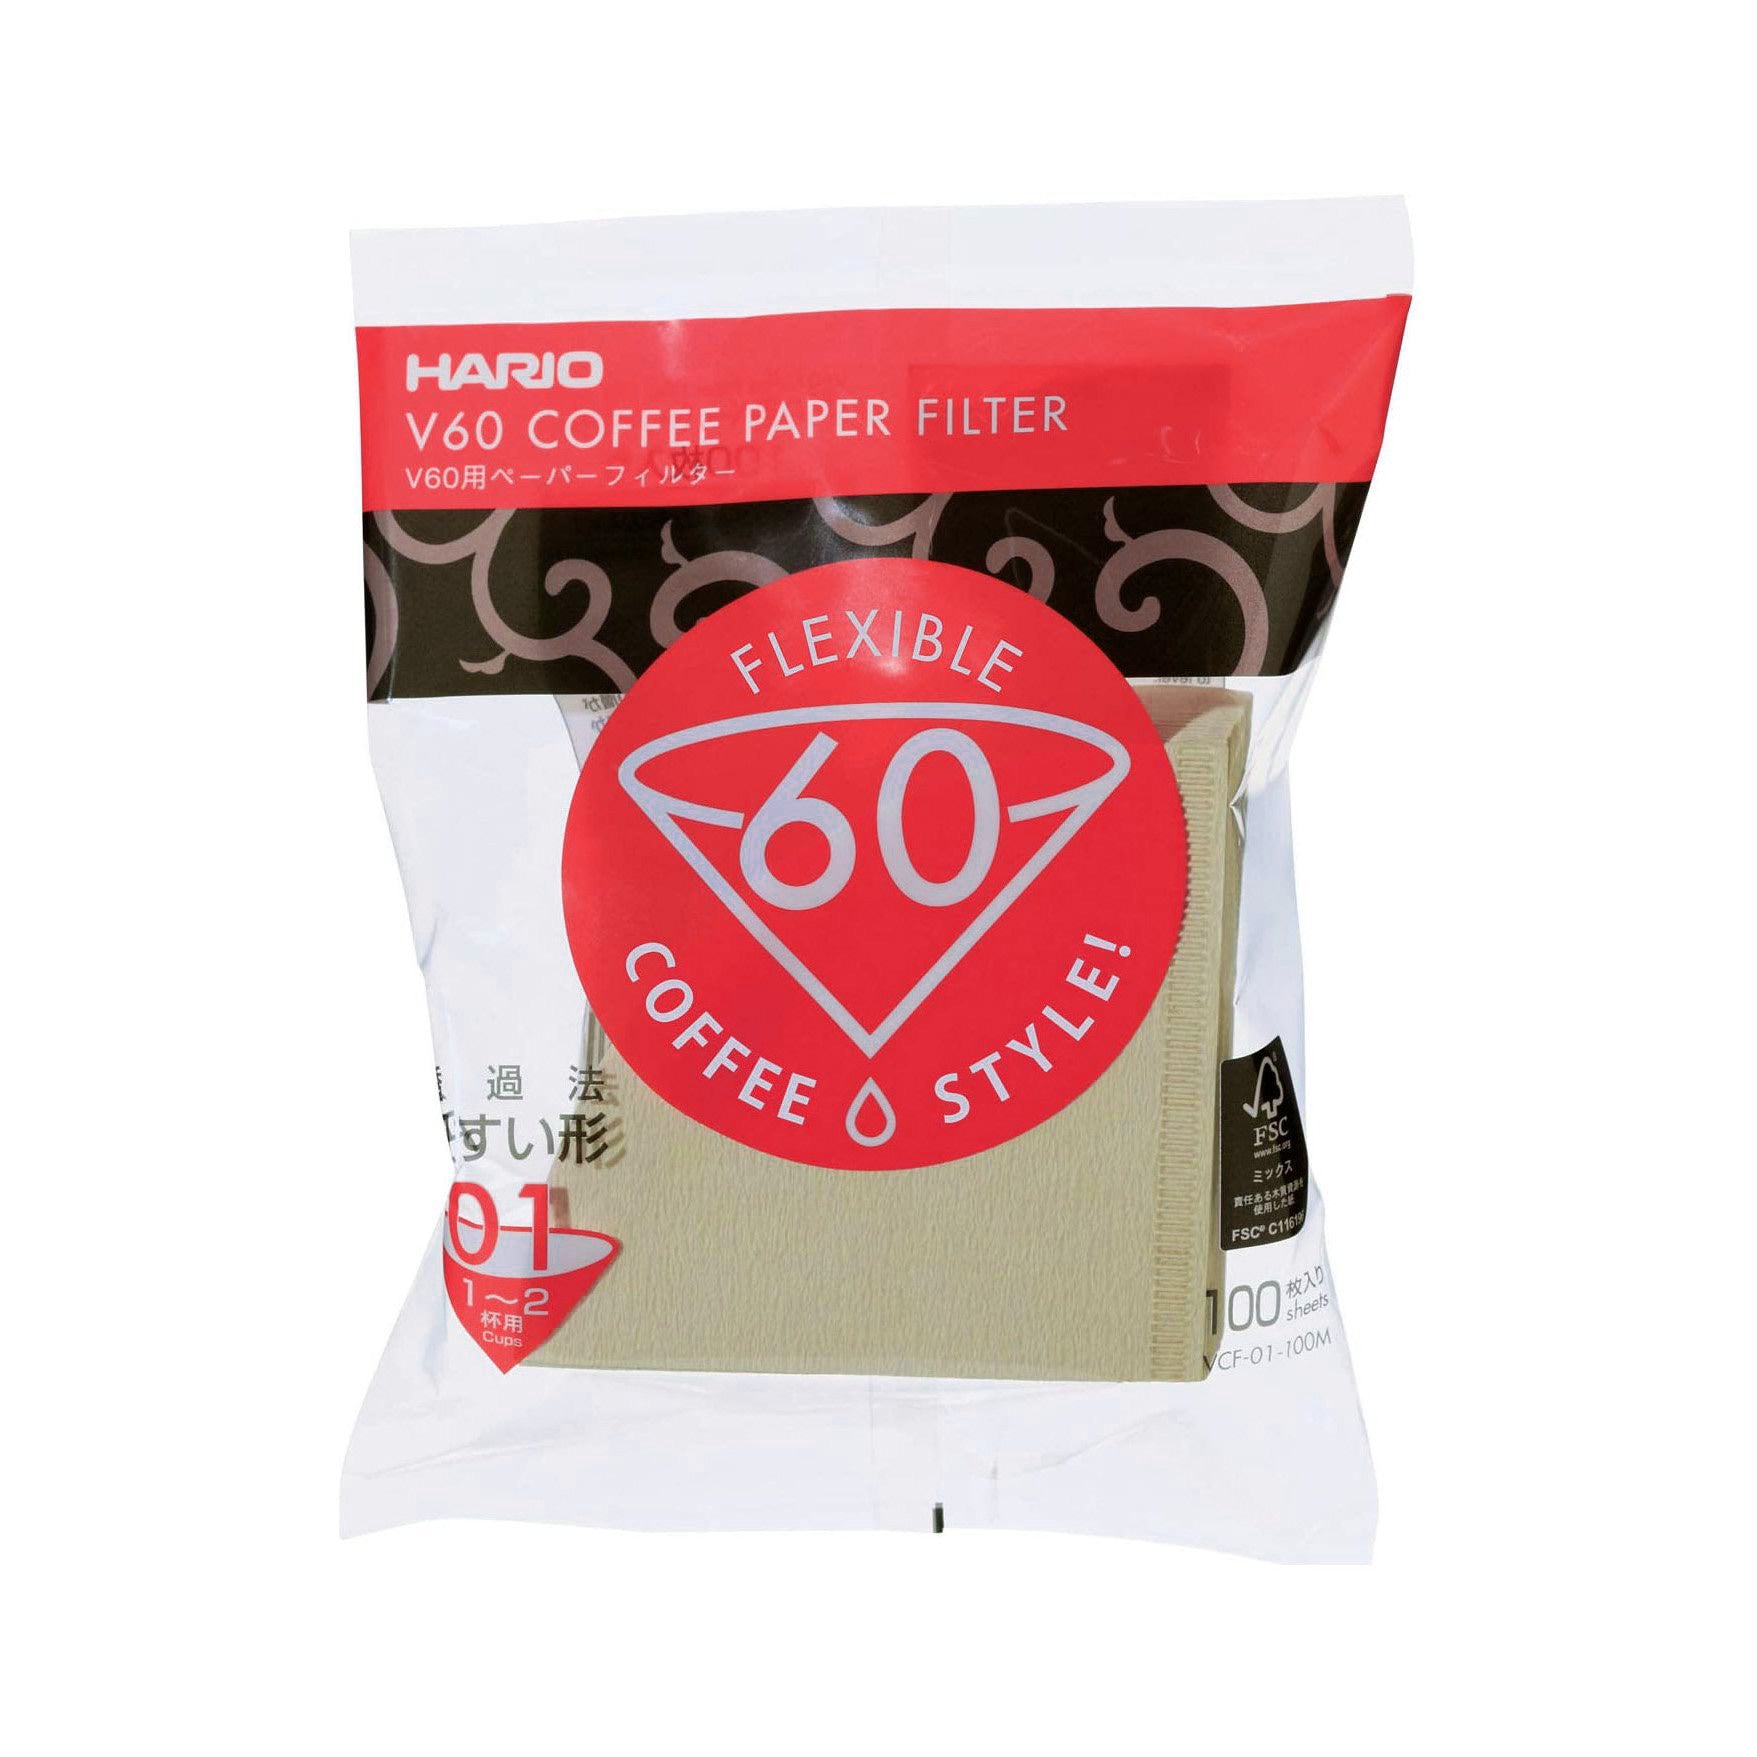 Hario V60 Coffee Paper Filter 01 (100 Sheet)